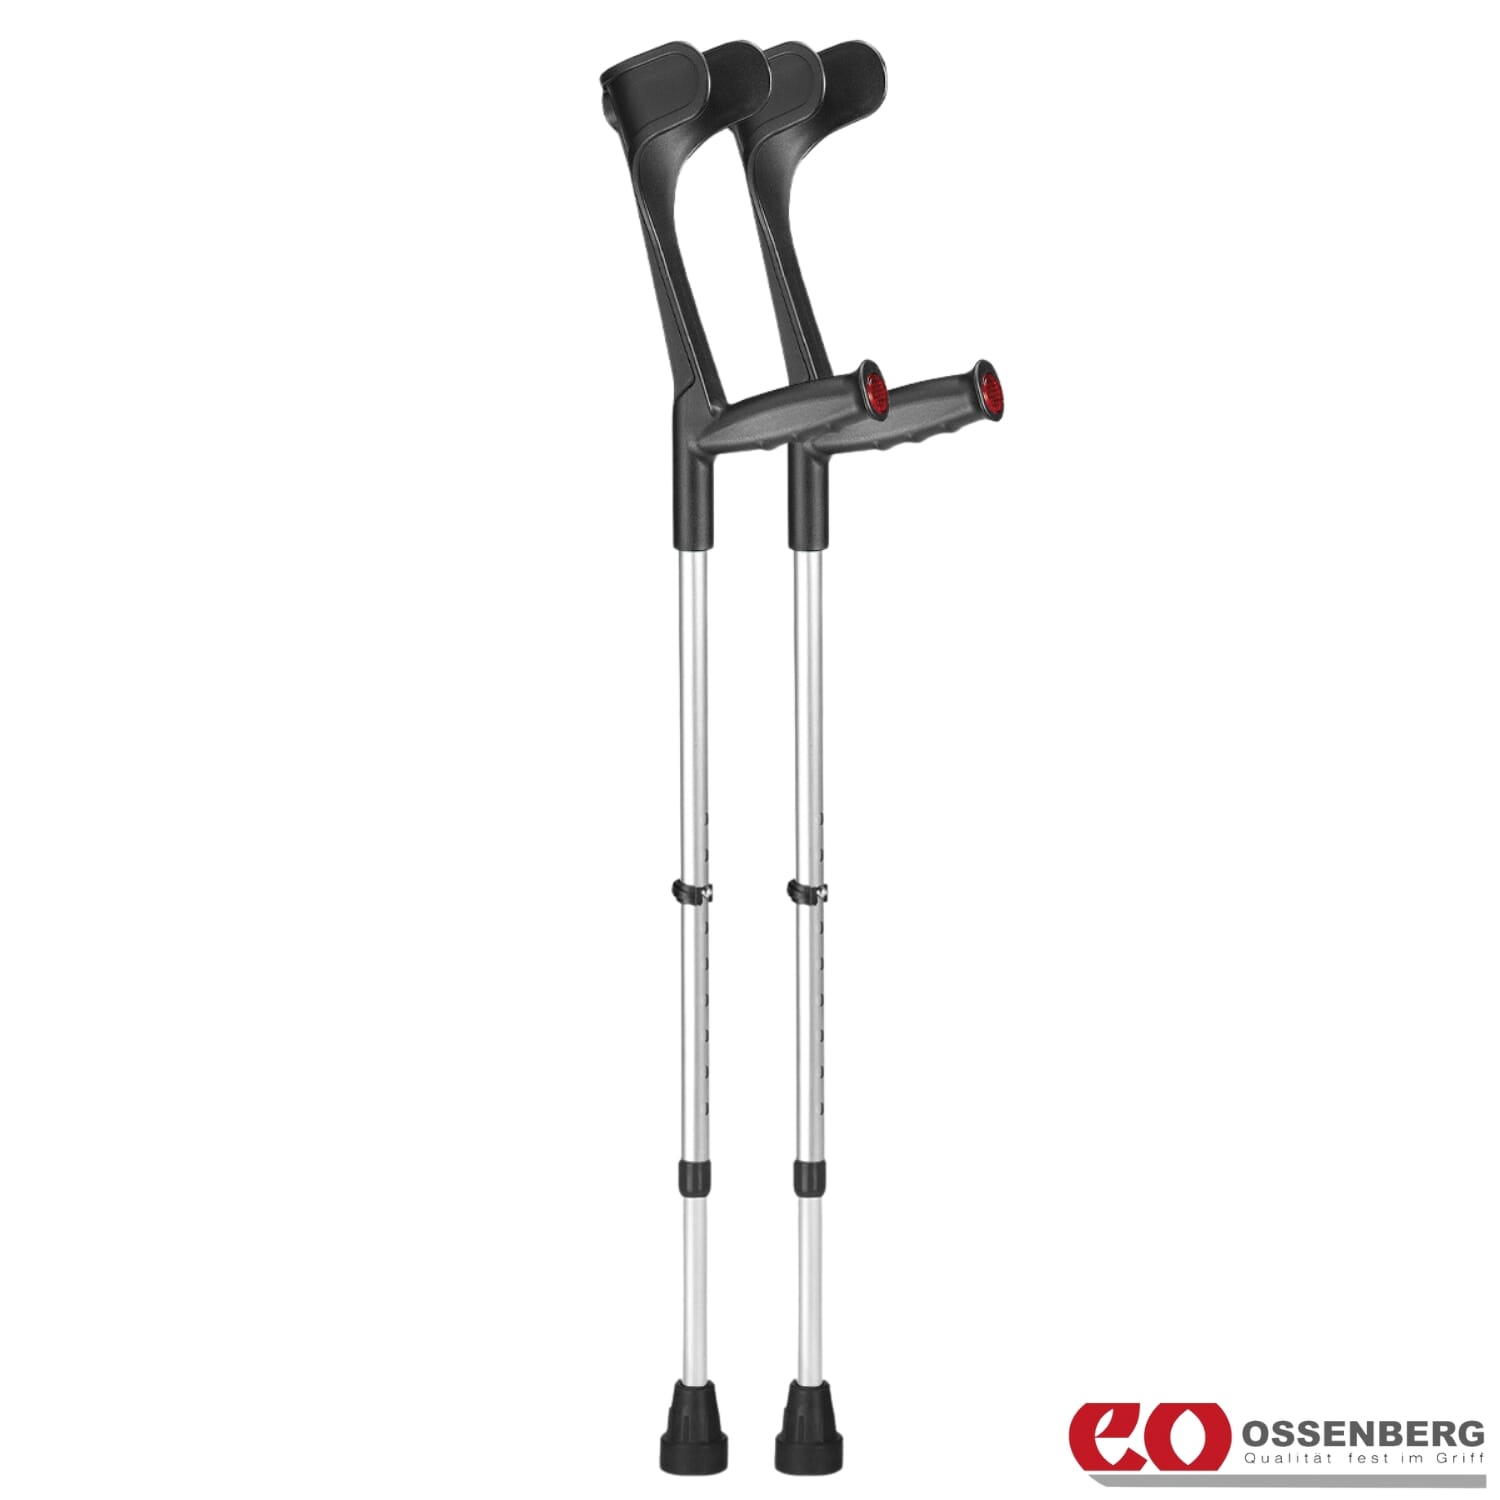 View Ossenberg Open Cuff Crutches Black Pair information